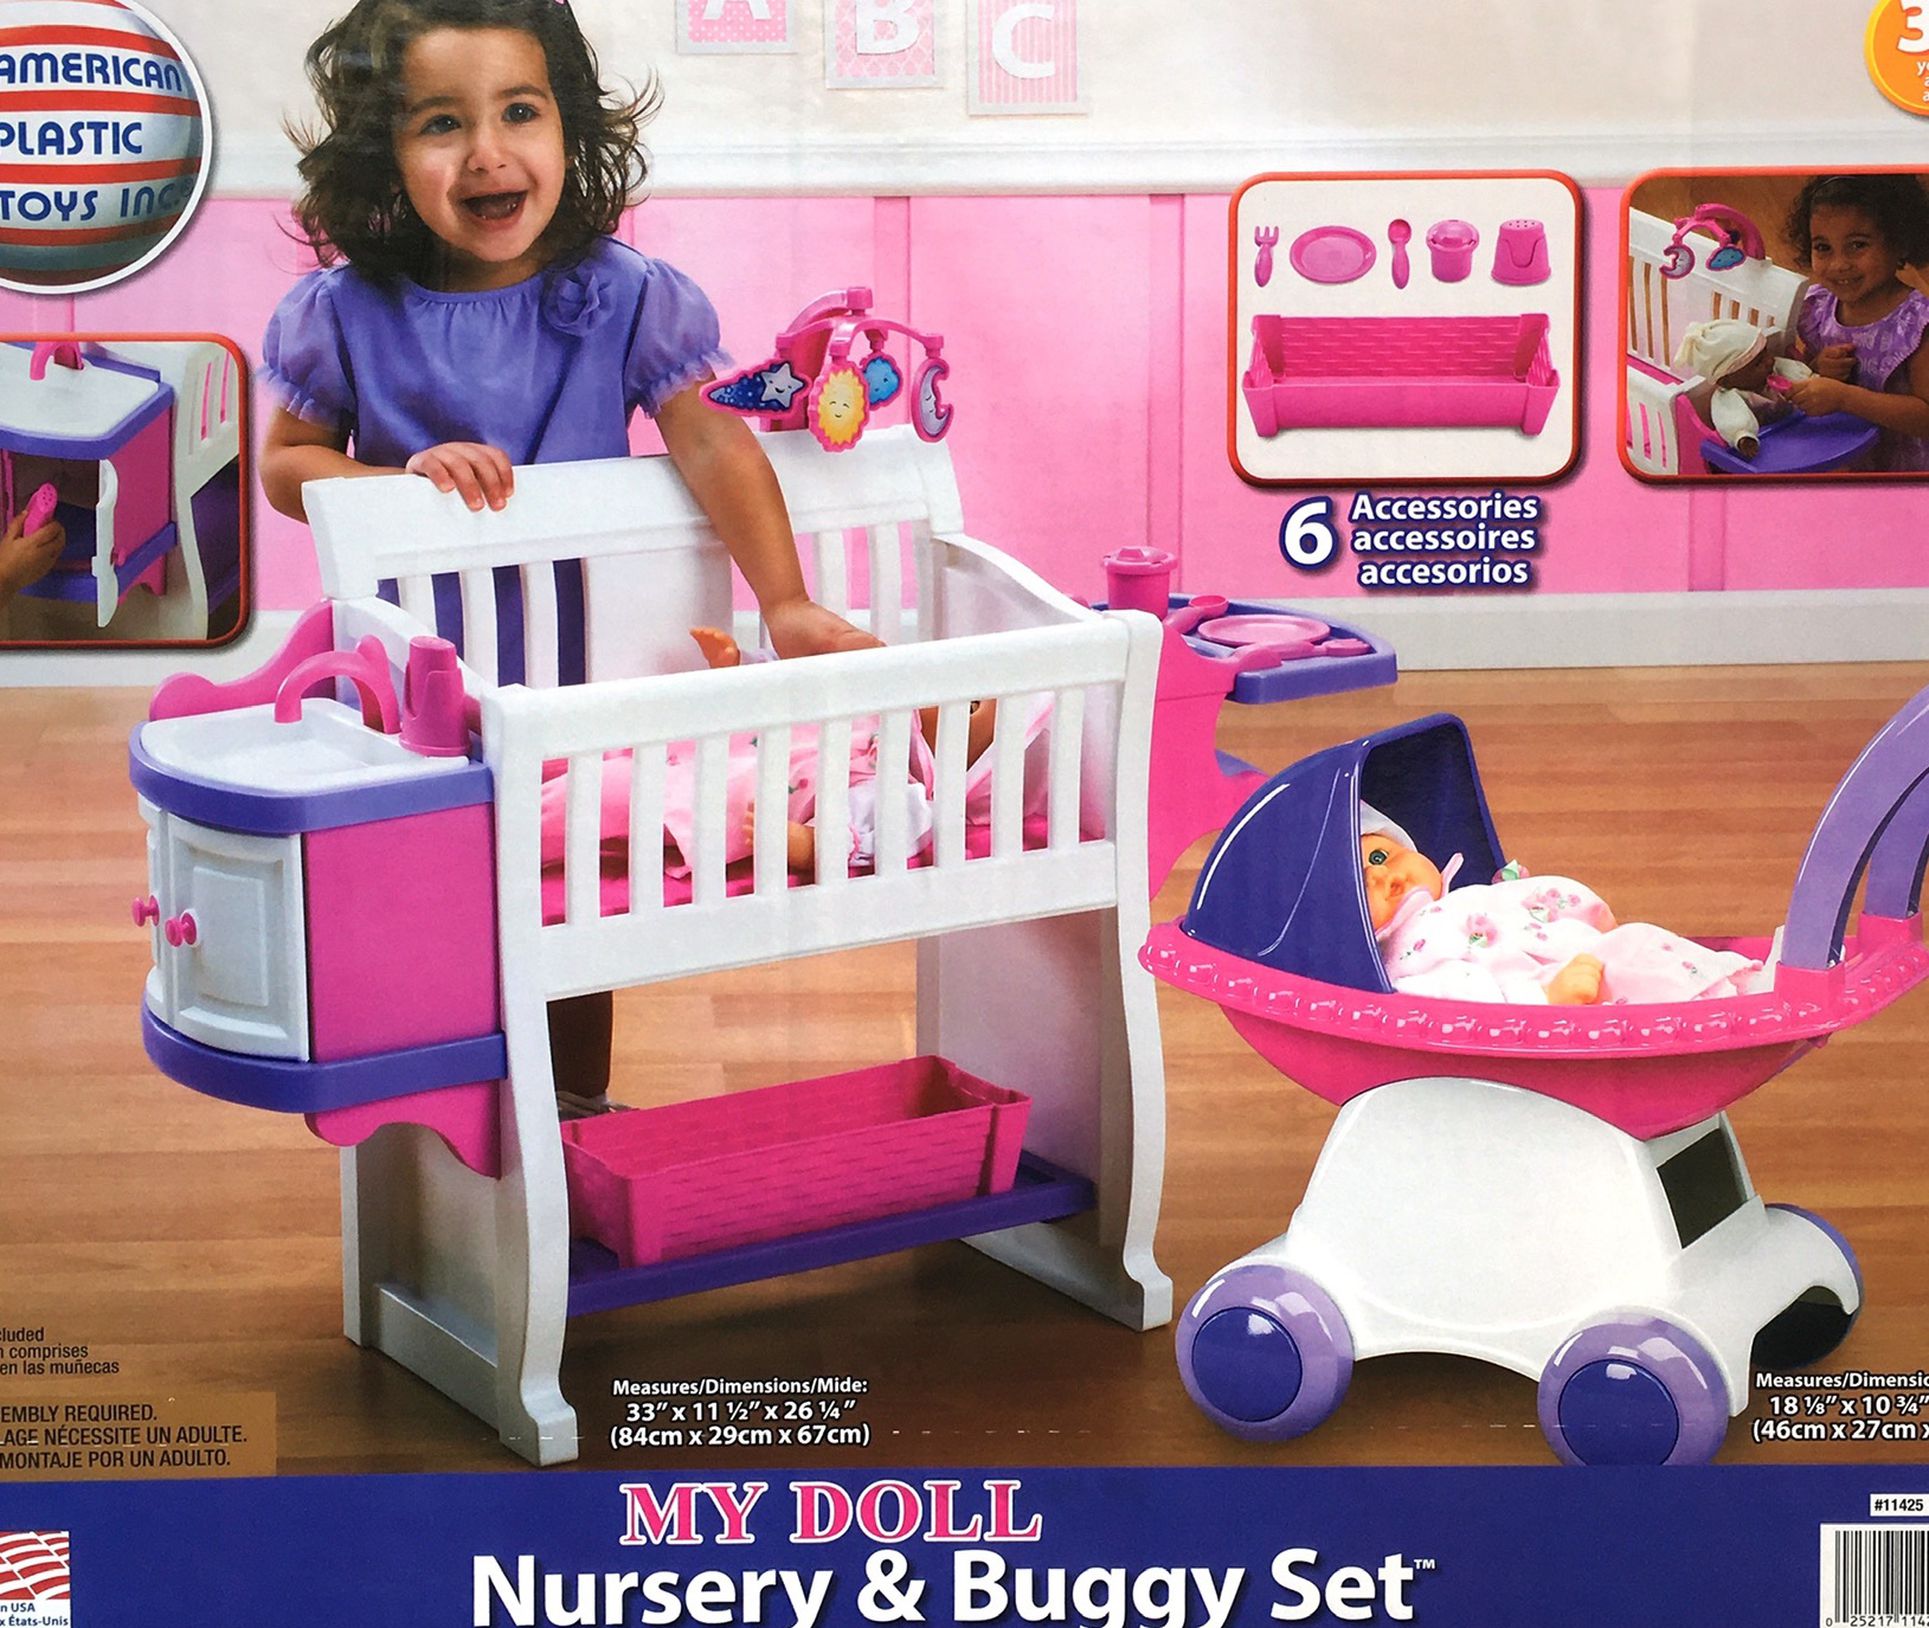 NEW American Plastic Toys Doll House Stroller Nursery & Buggy Set